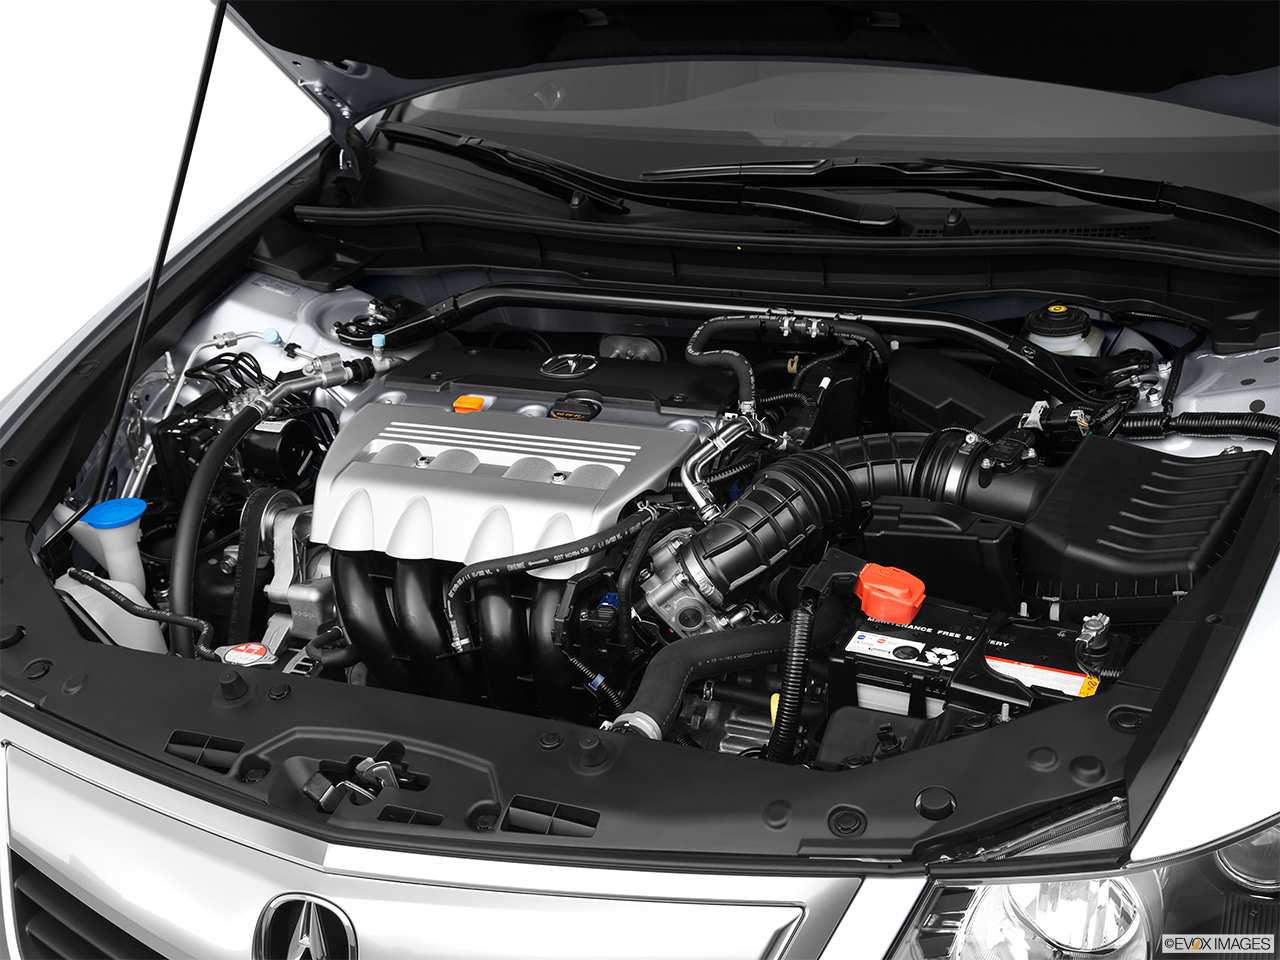 2012 Acura TSX 5-Speed Automatic Engine. 